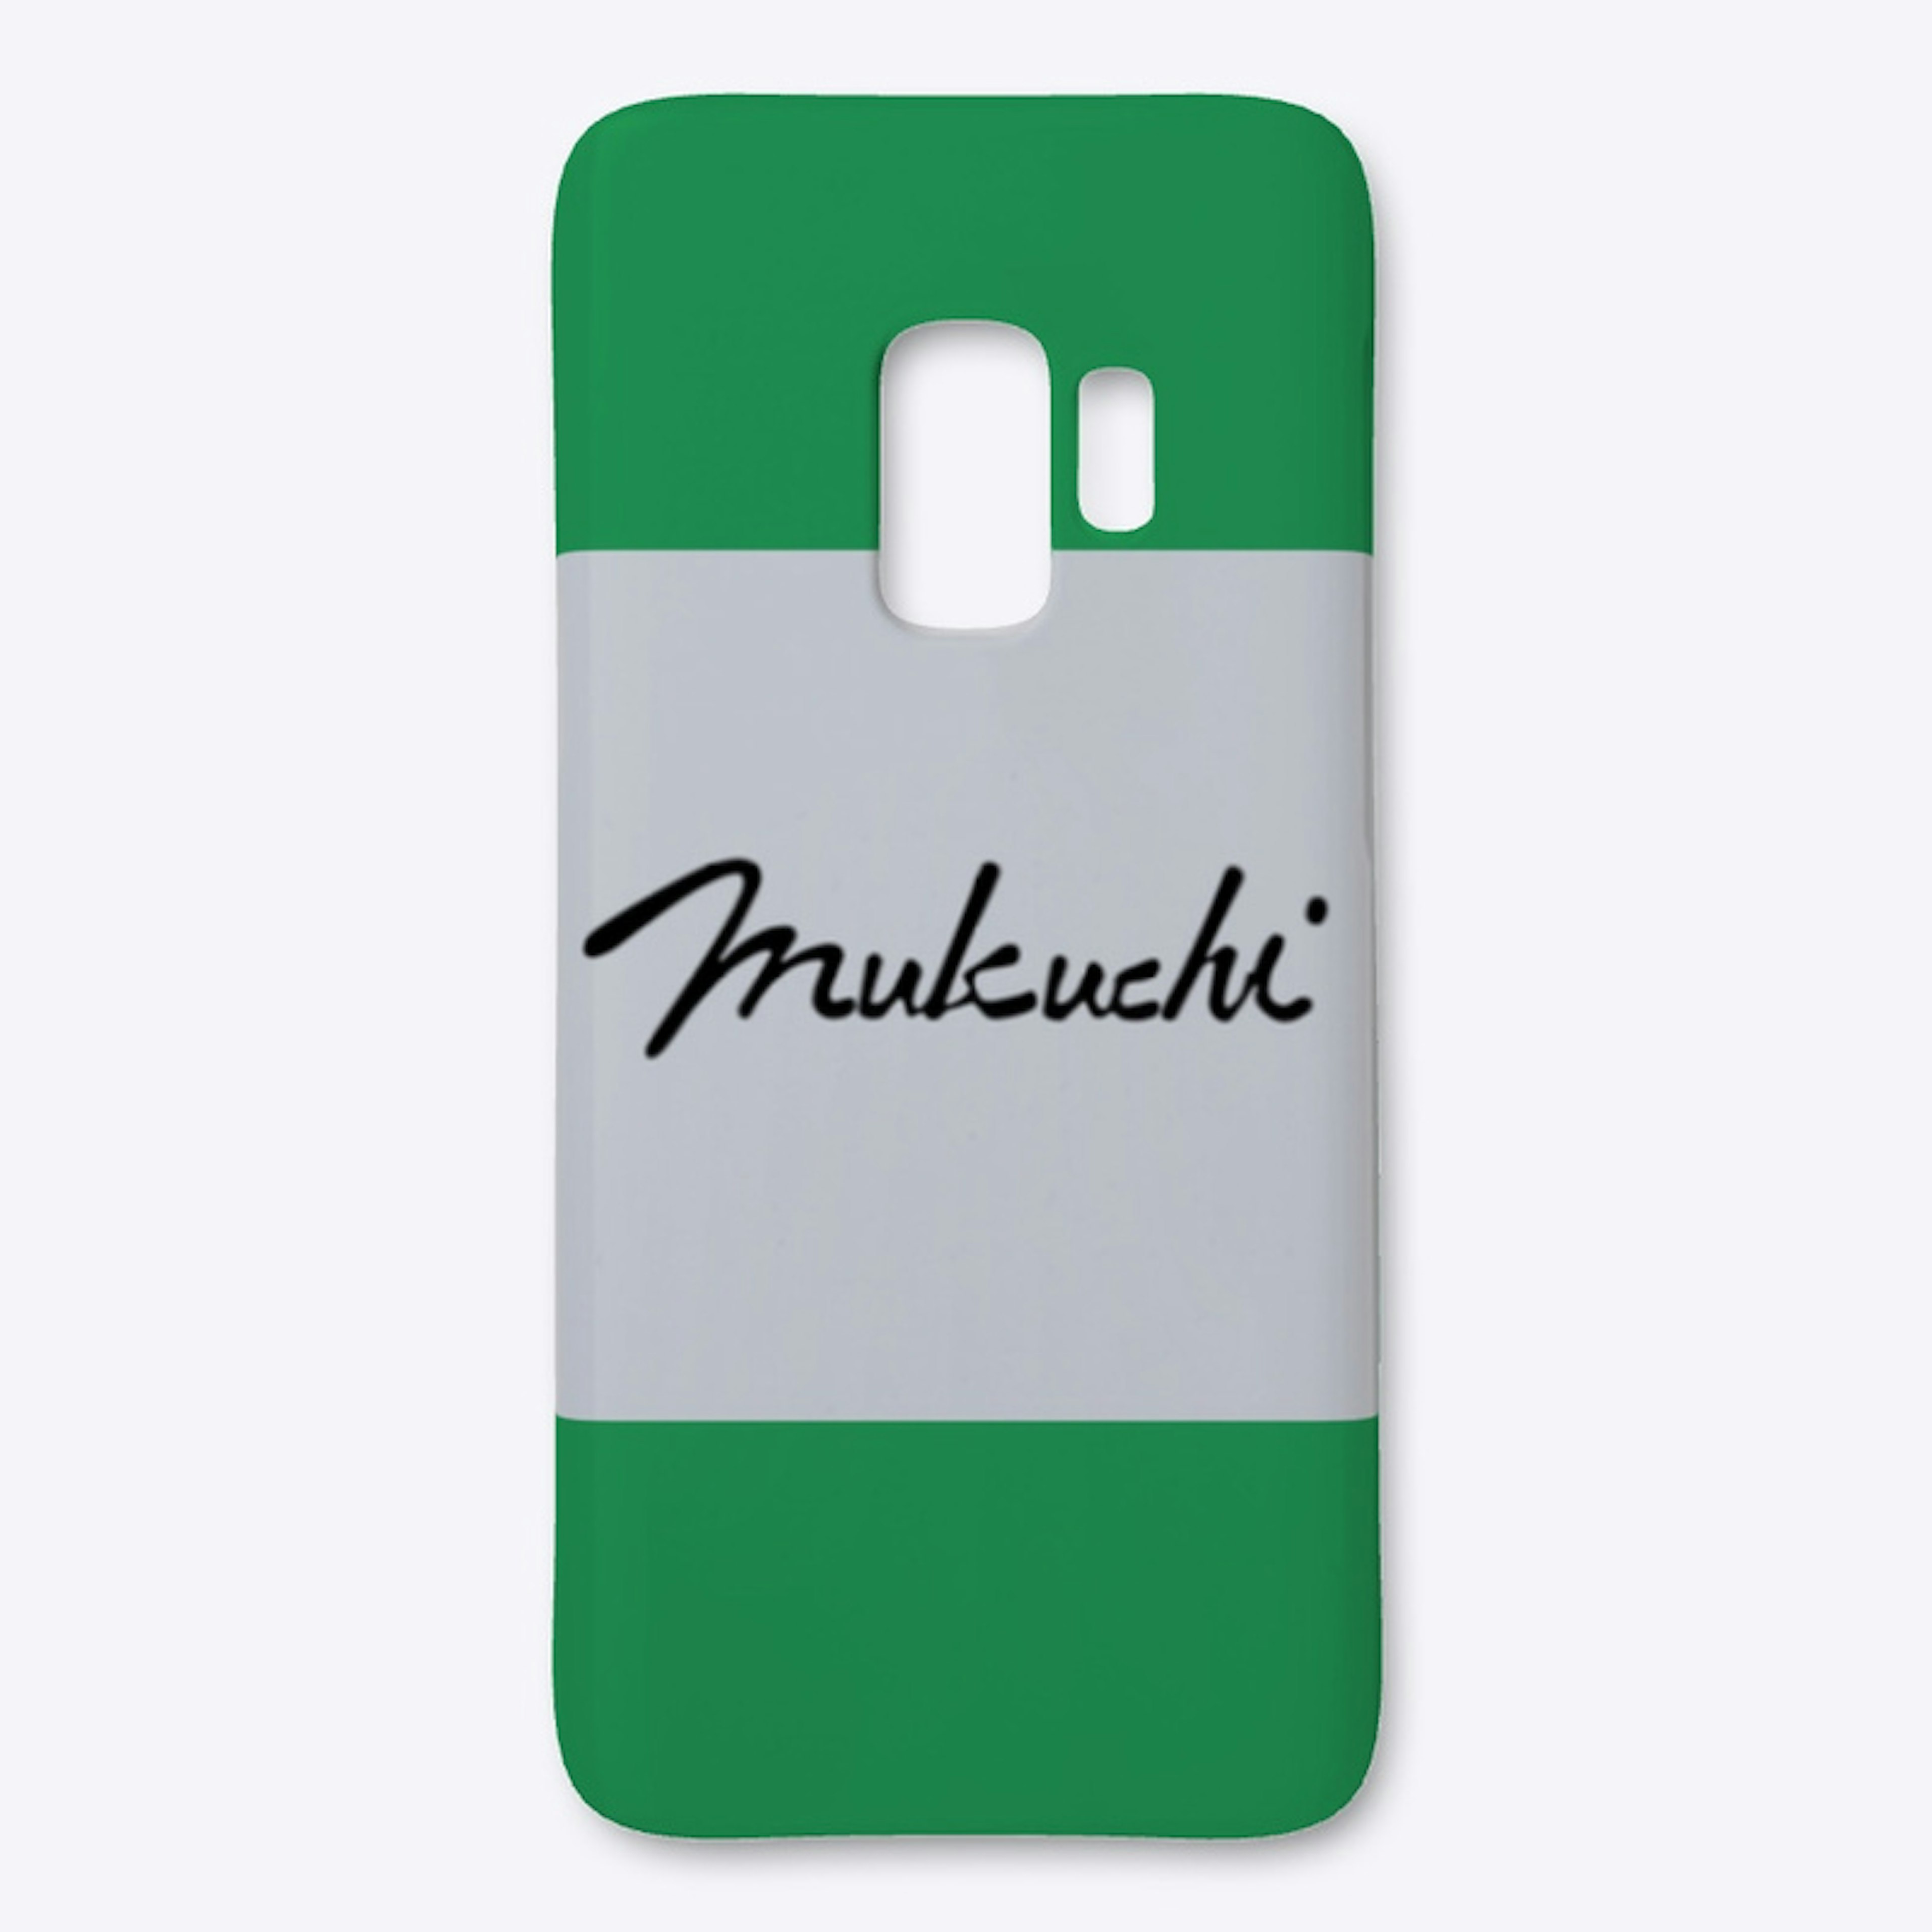 "mukuchi" the fe○der style